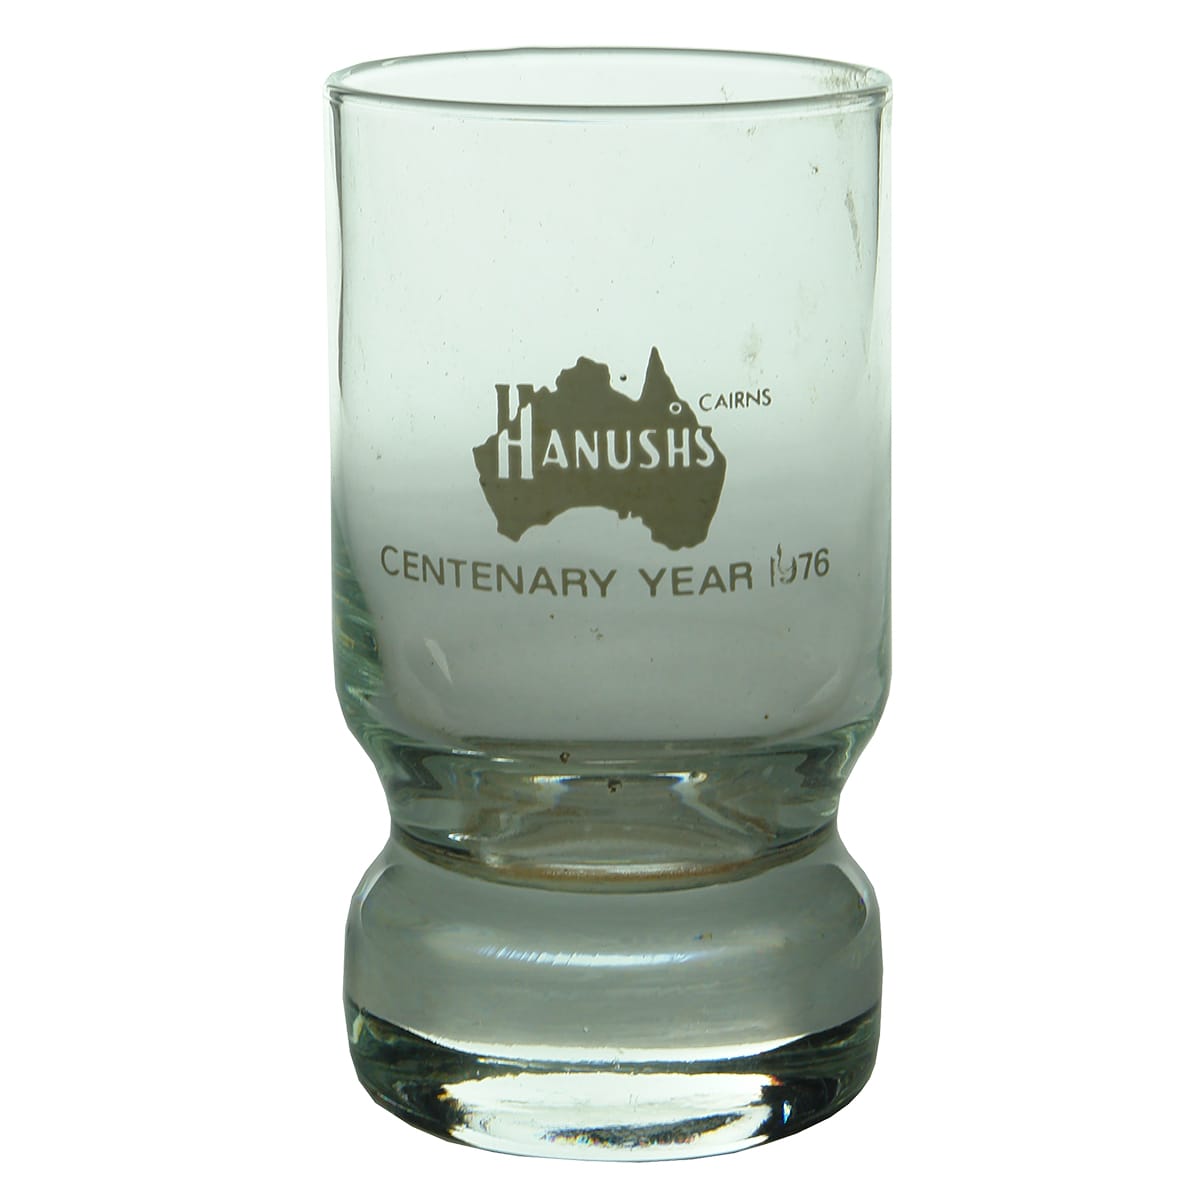 Drinking Glass. Ceramic Label. Hanush's Cairns Centenary 1976. (Queensland)